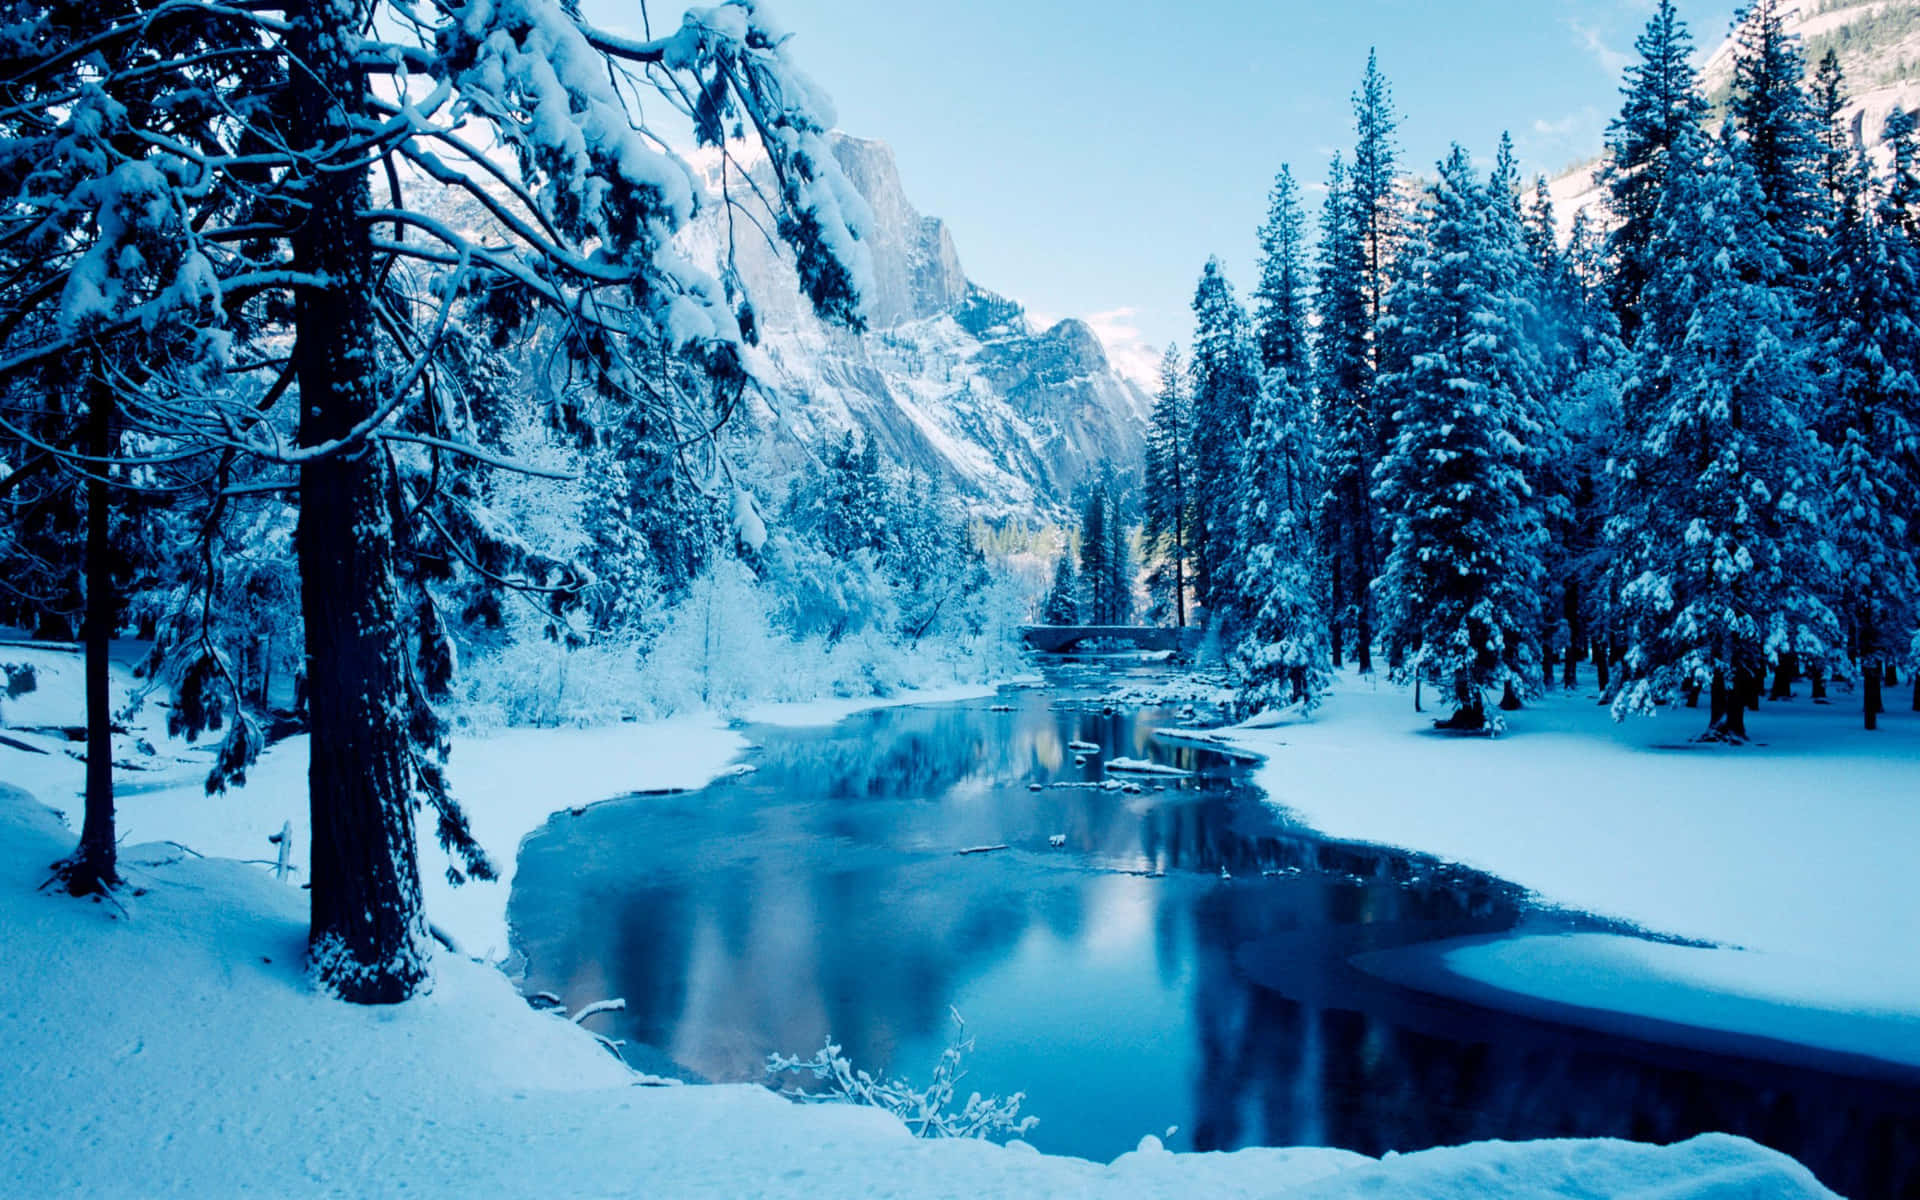 Enjoy the beauty of nature this winter season!